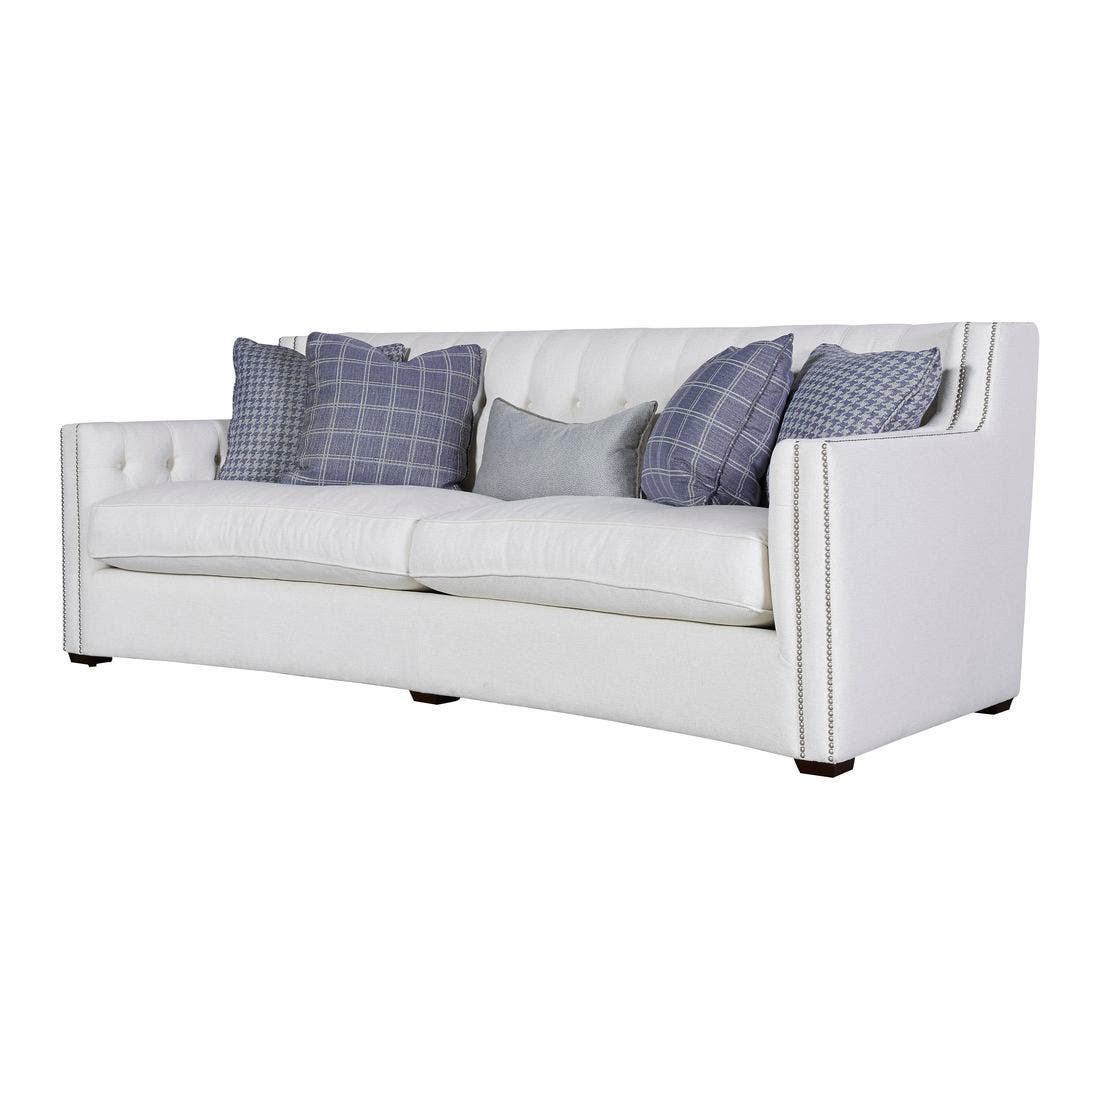 19151902-688501-610-furniture-sofa-recliner-sofas-01